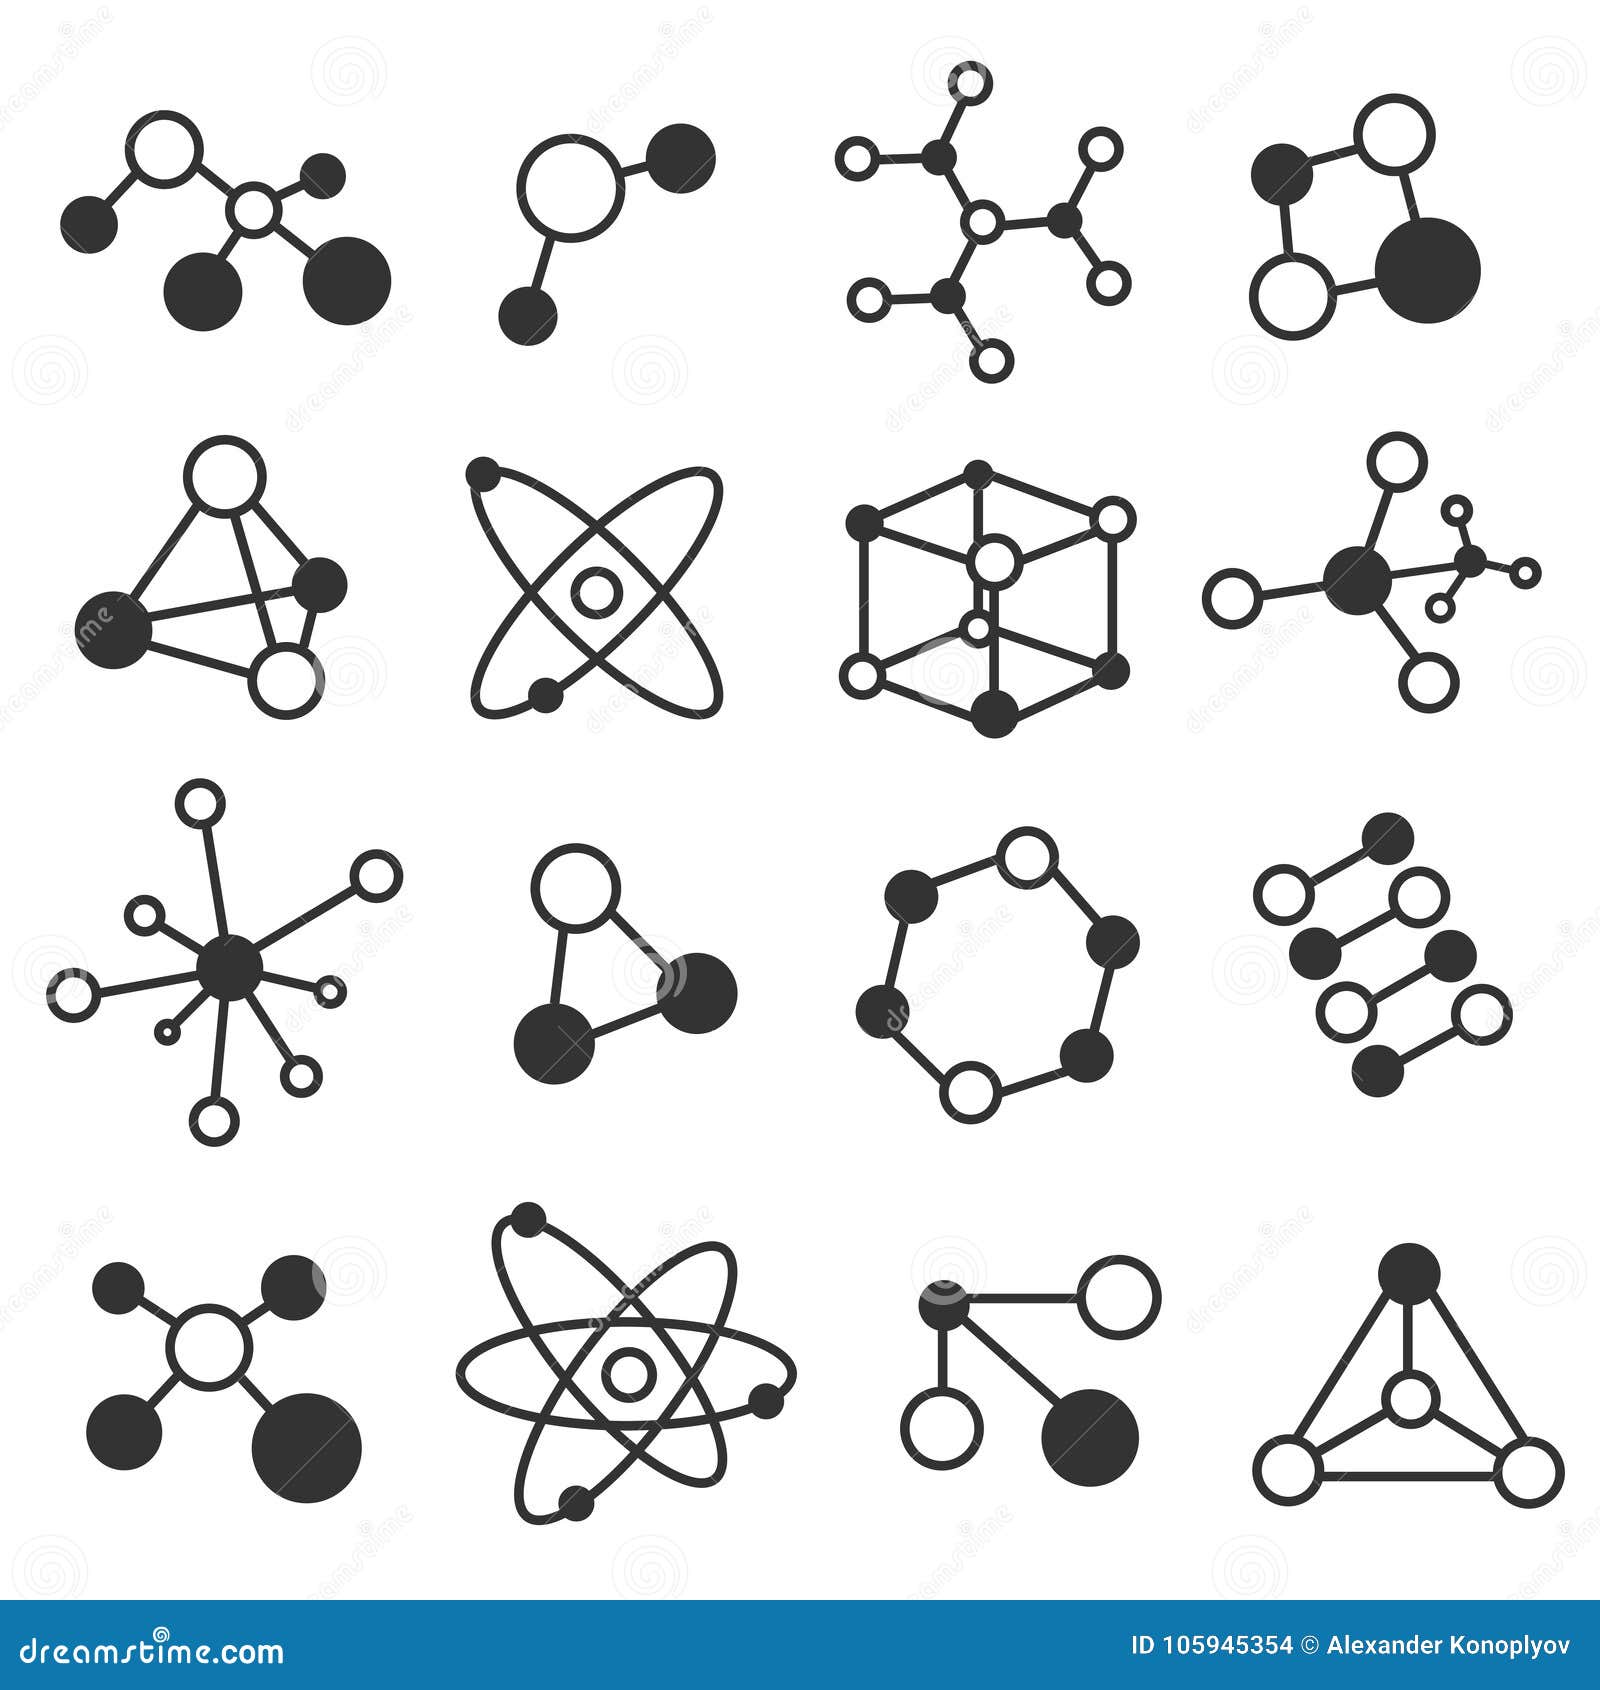 Molecule icon set stock vector. Illustration of cartoon - 105945354